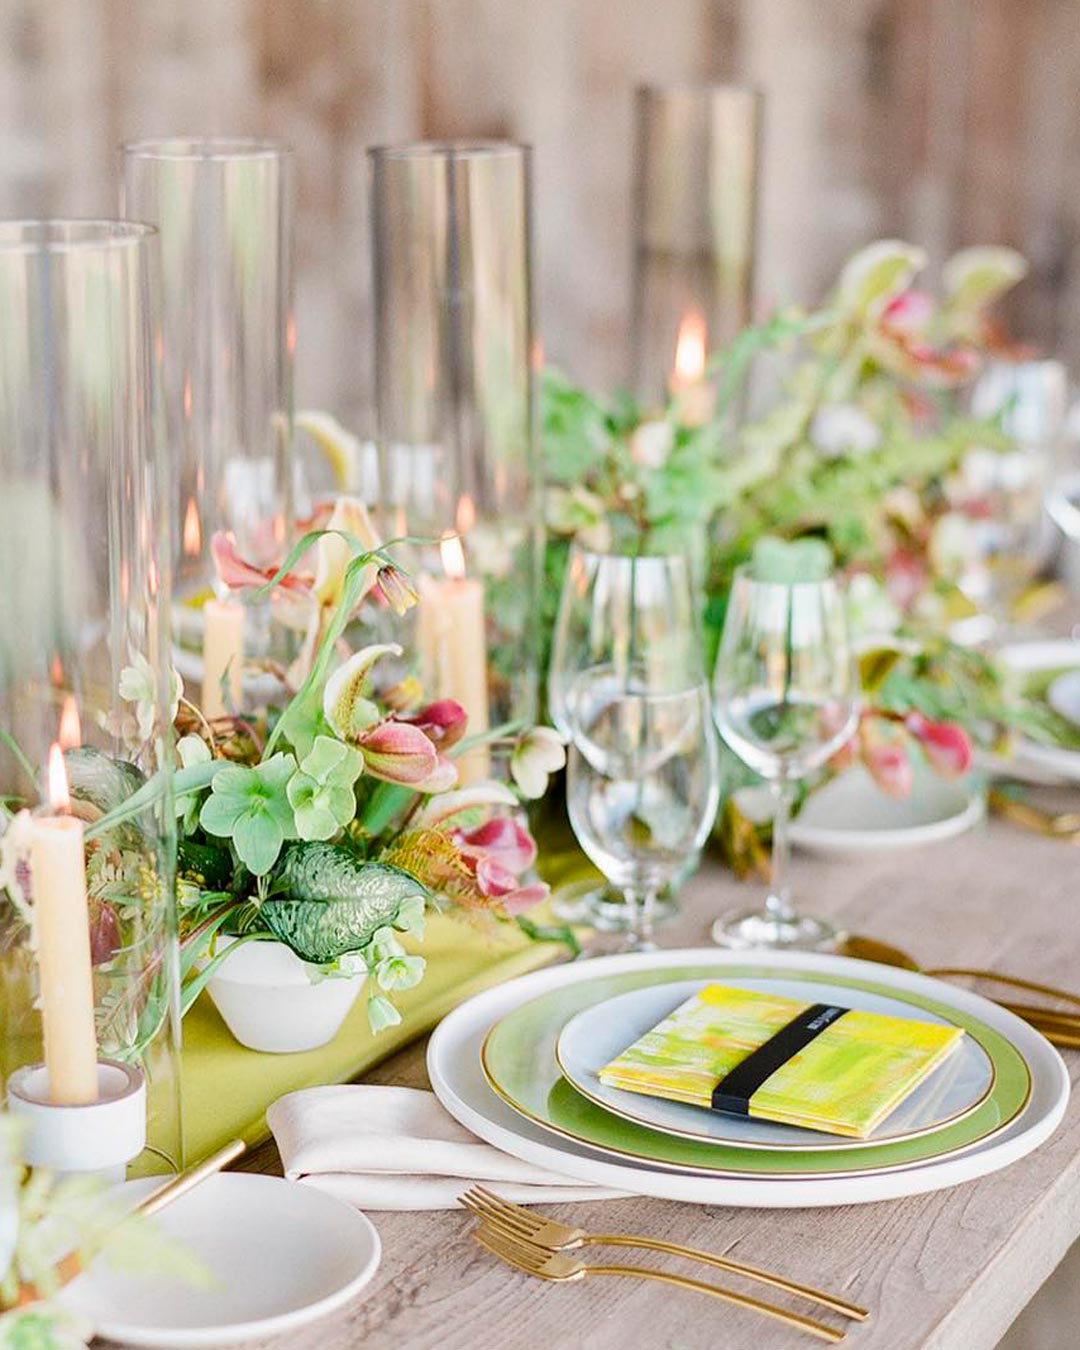 how to choose wedding colors avacado table decor